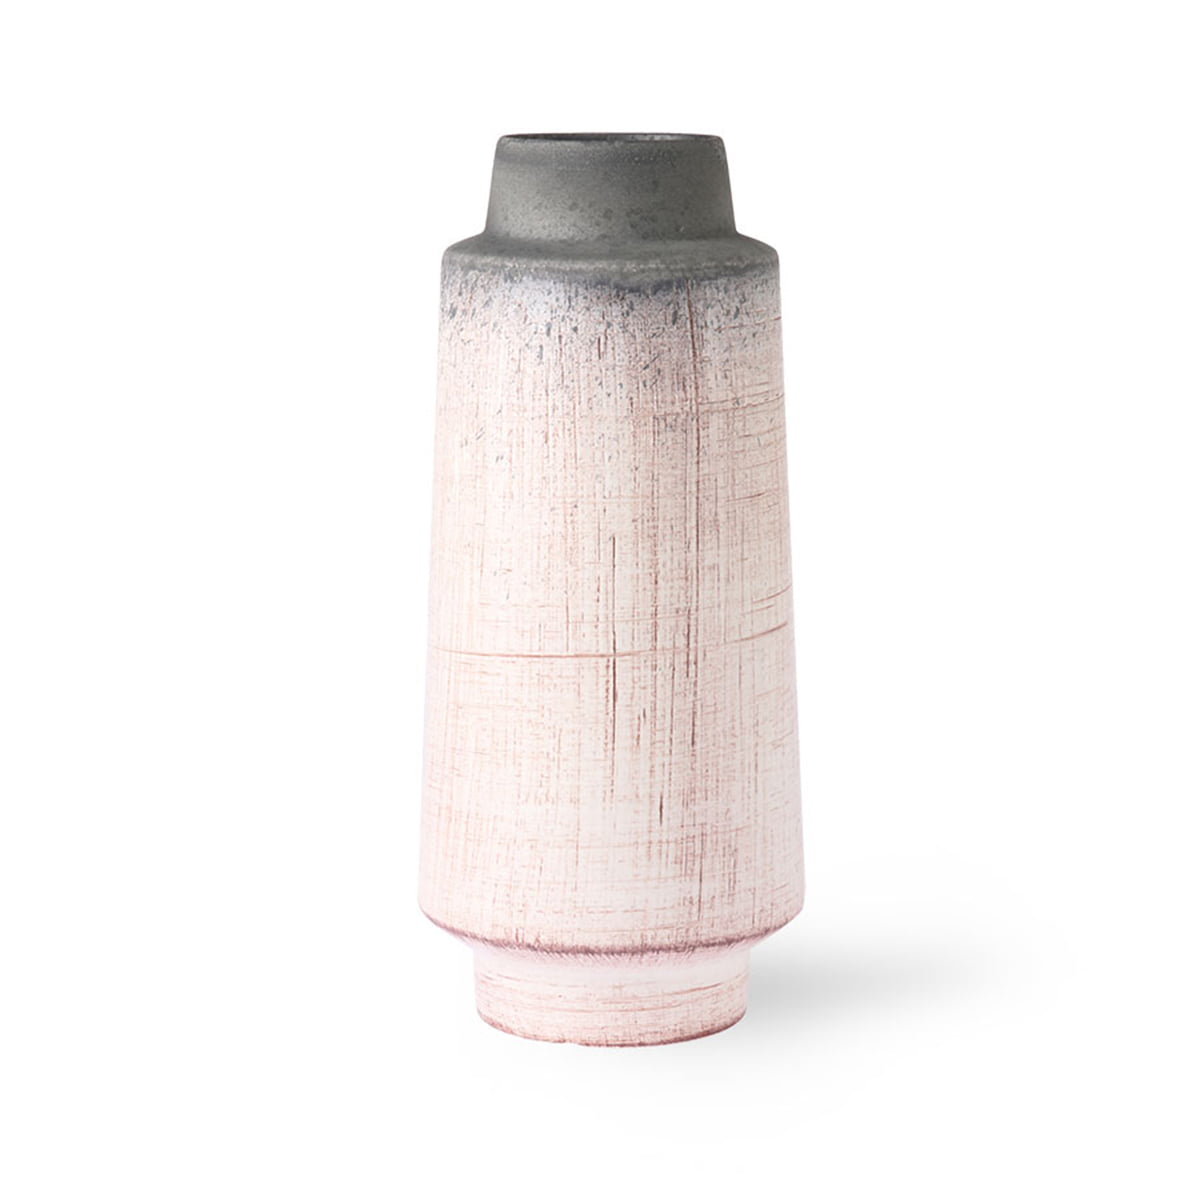 HKliving - Keramikvase, rosa / grau